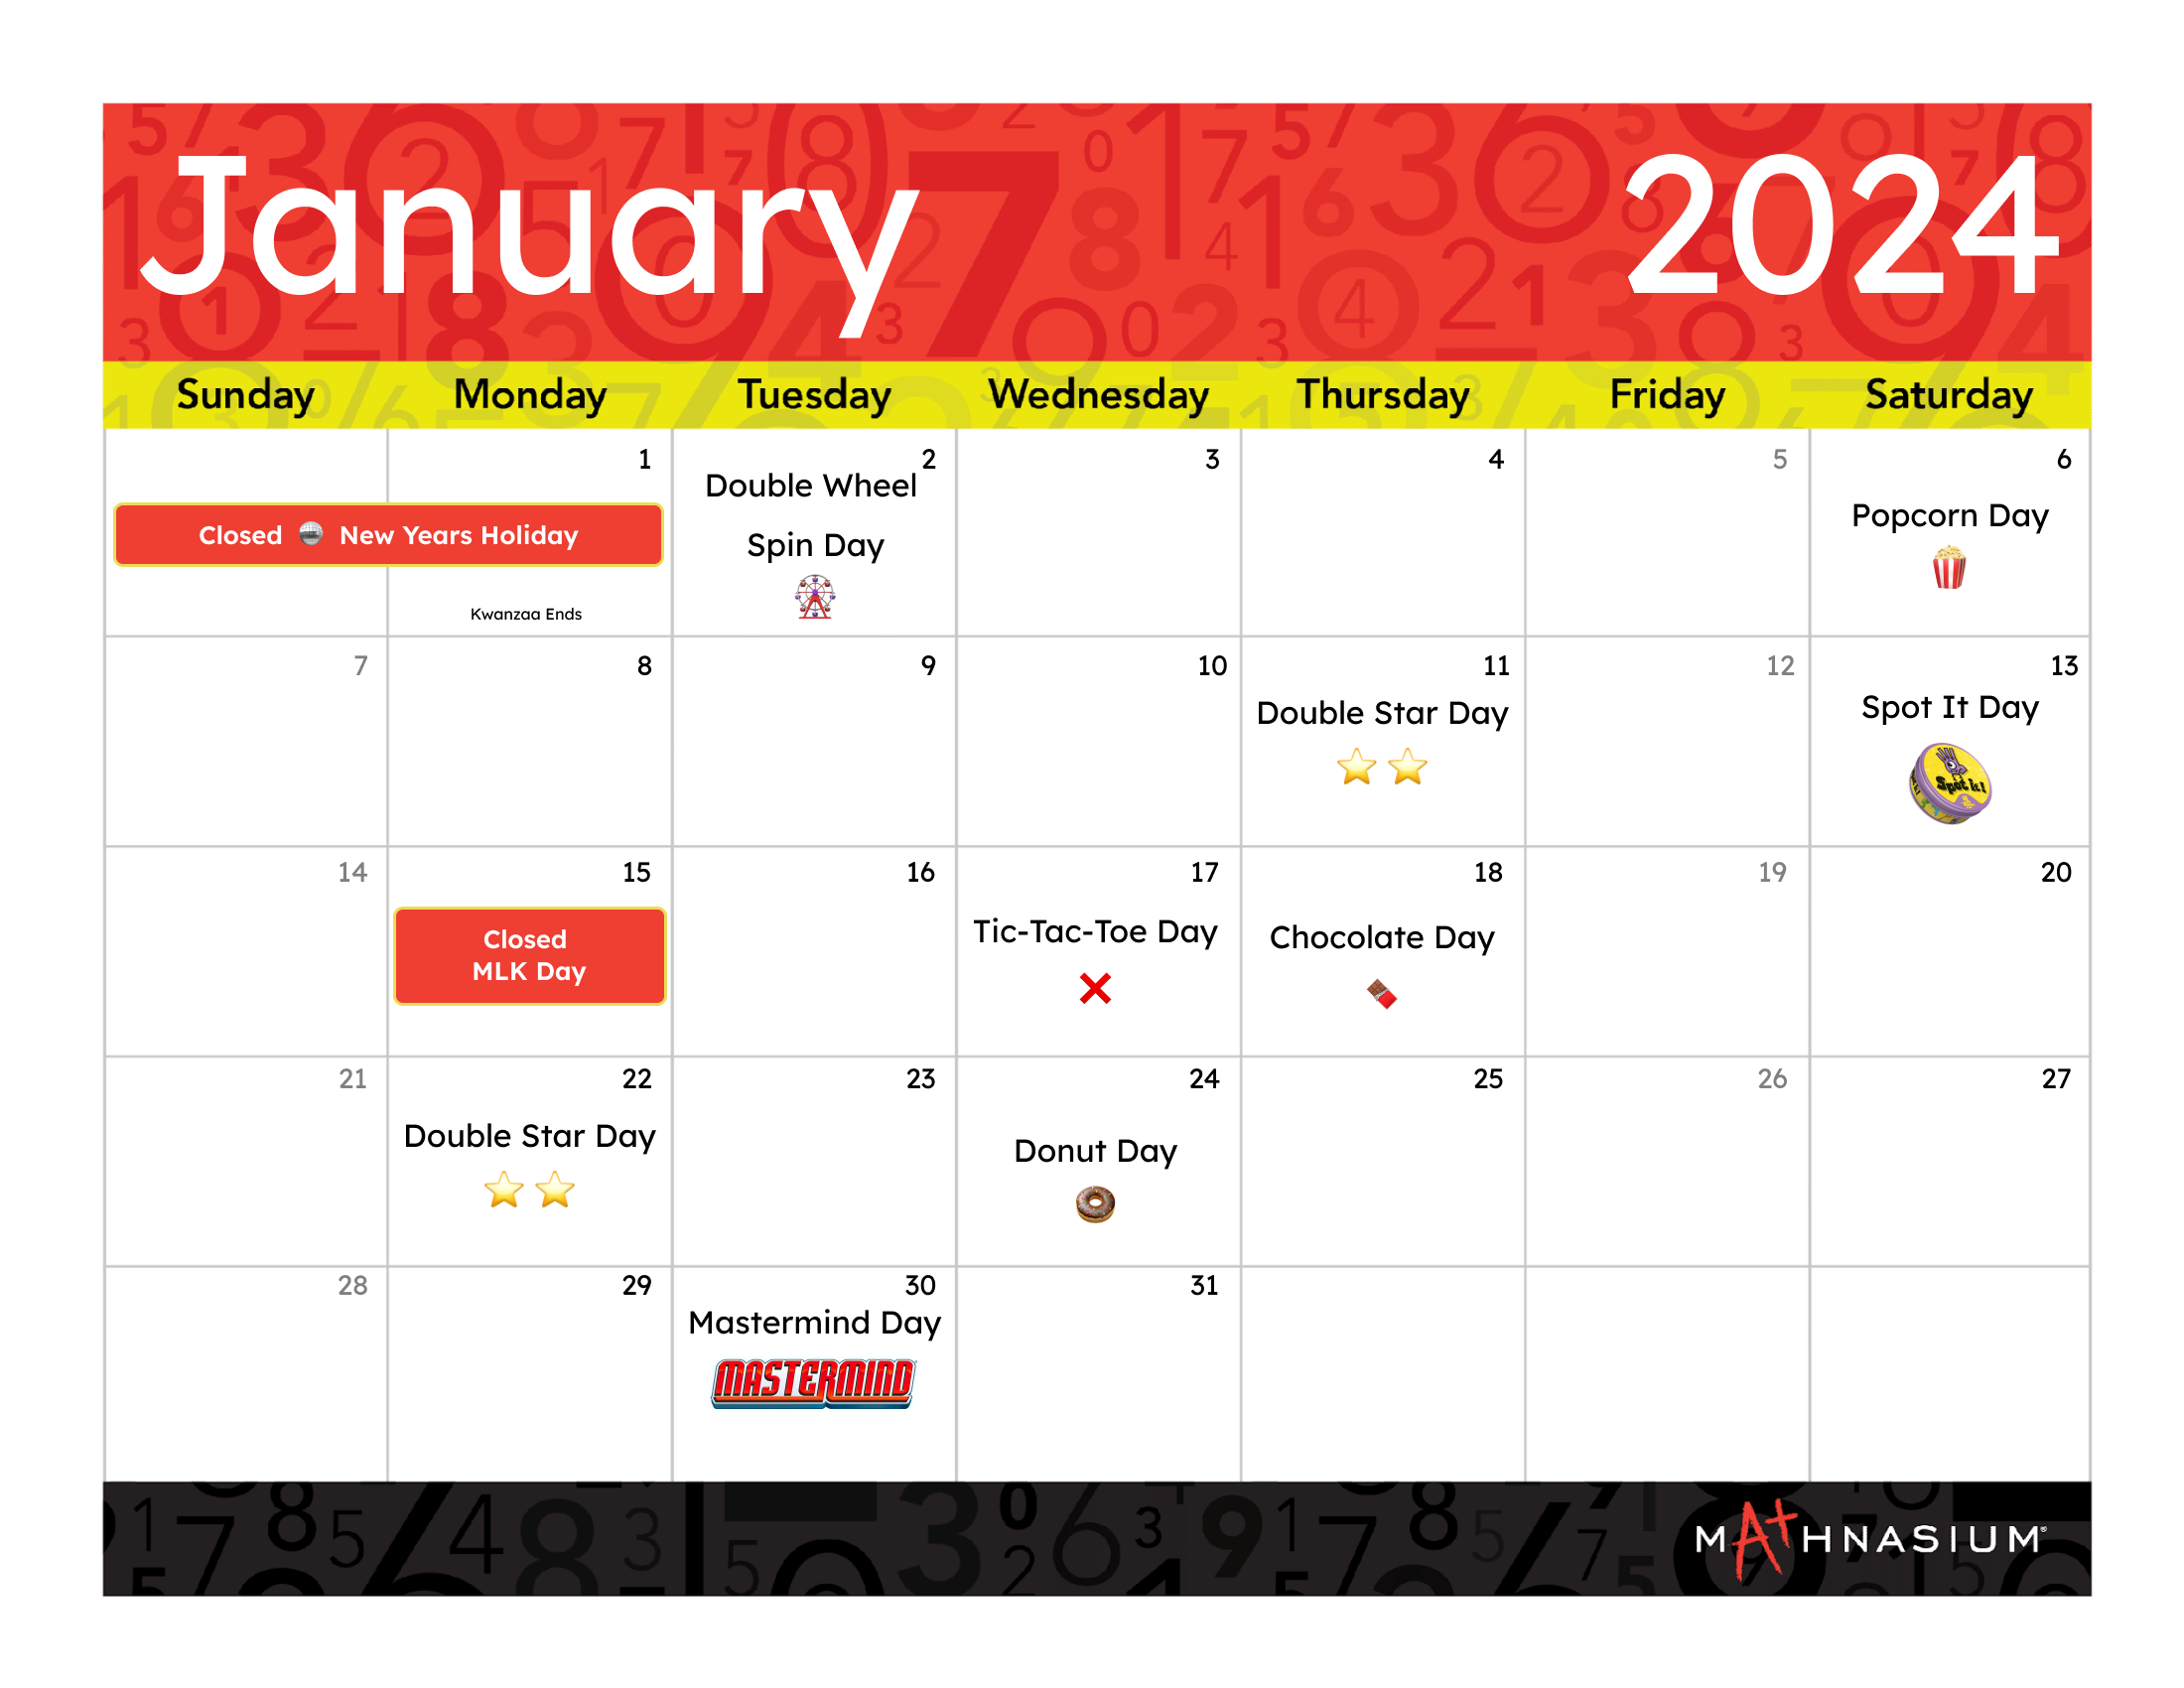 January Events Calendar